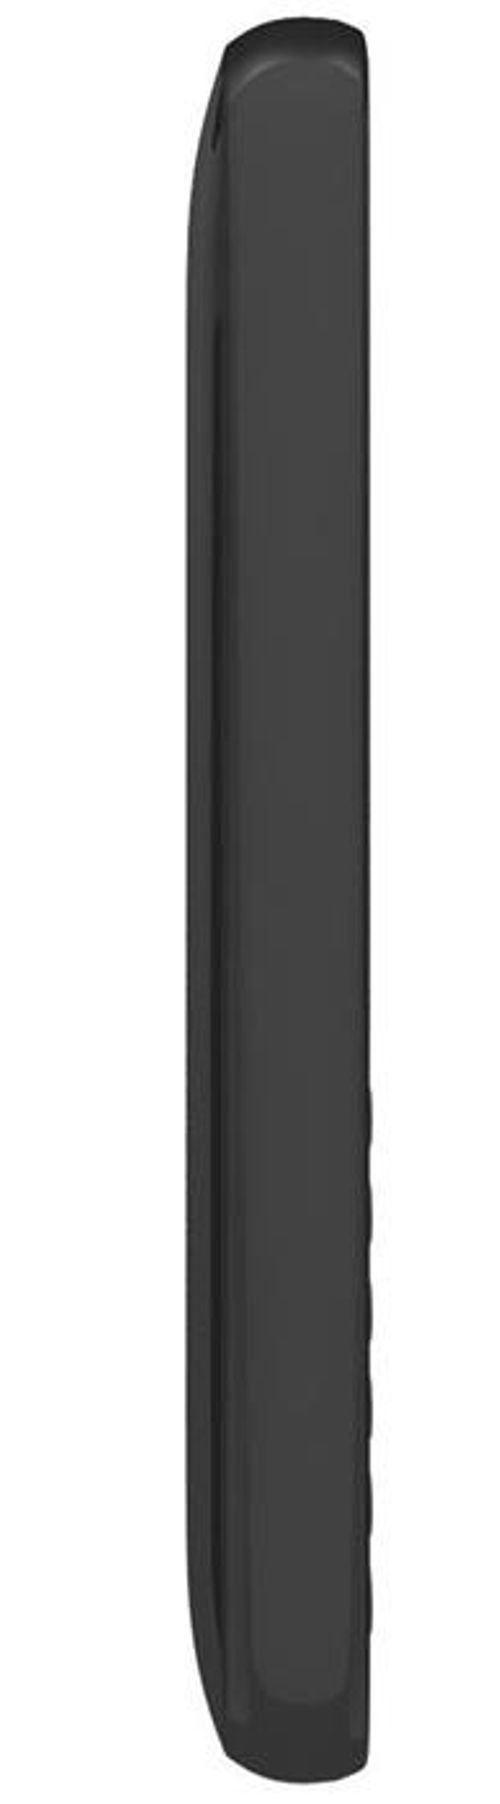 Nokia 215 mobile - 2GB - 2.4 inch - Dual Sim - Black color